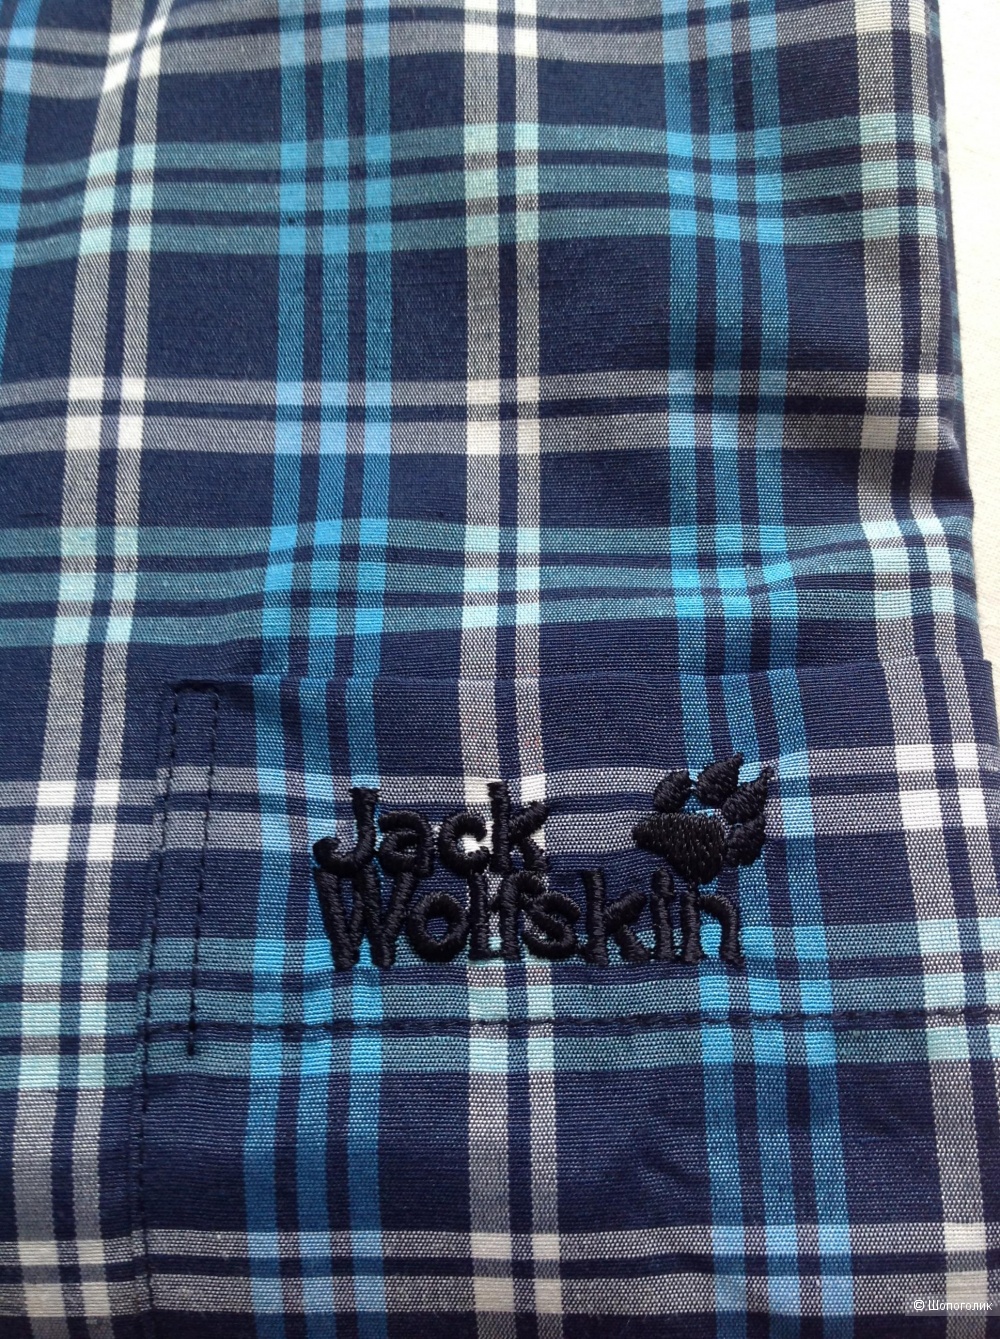 Рубашка Jack Wolfskin, размер XXL